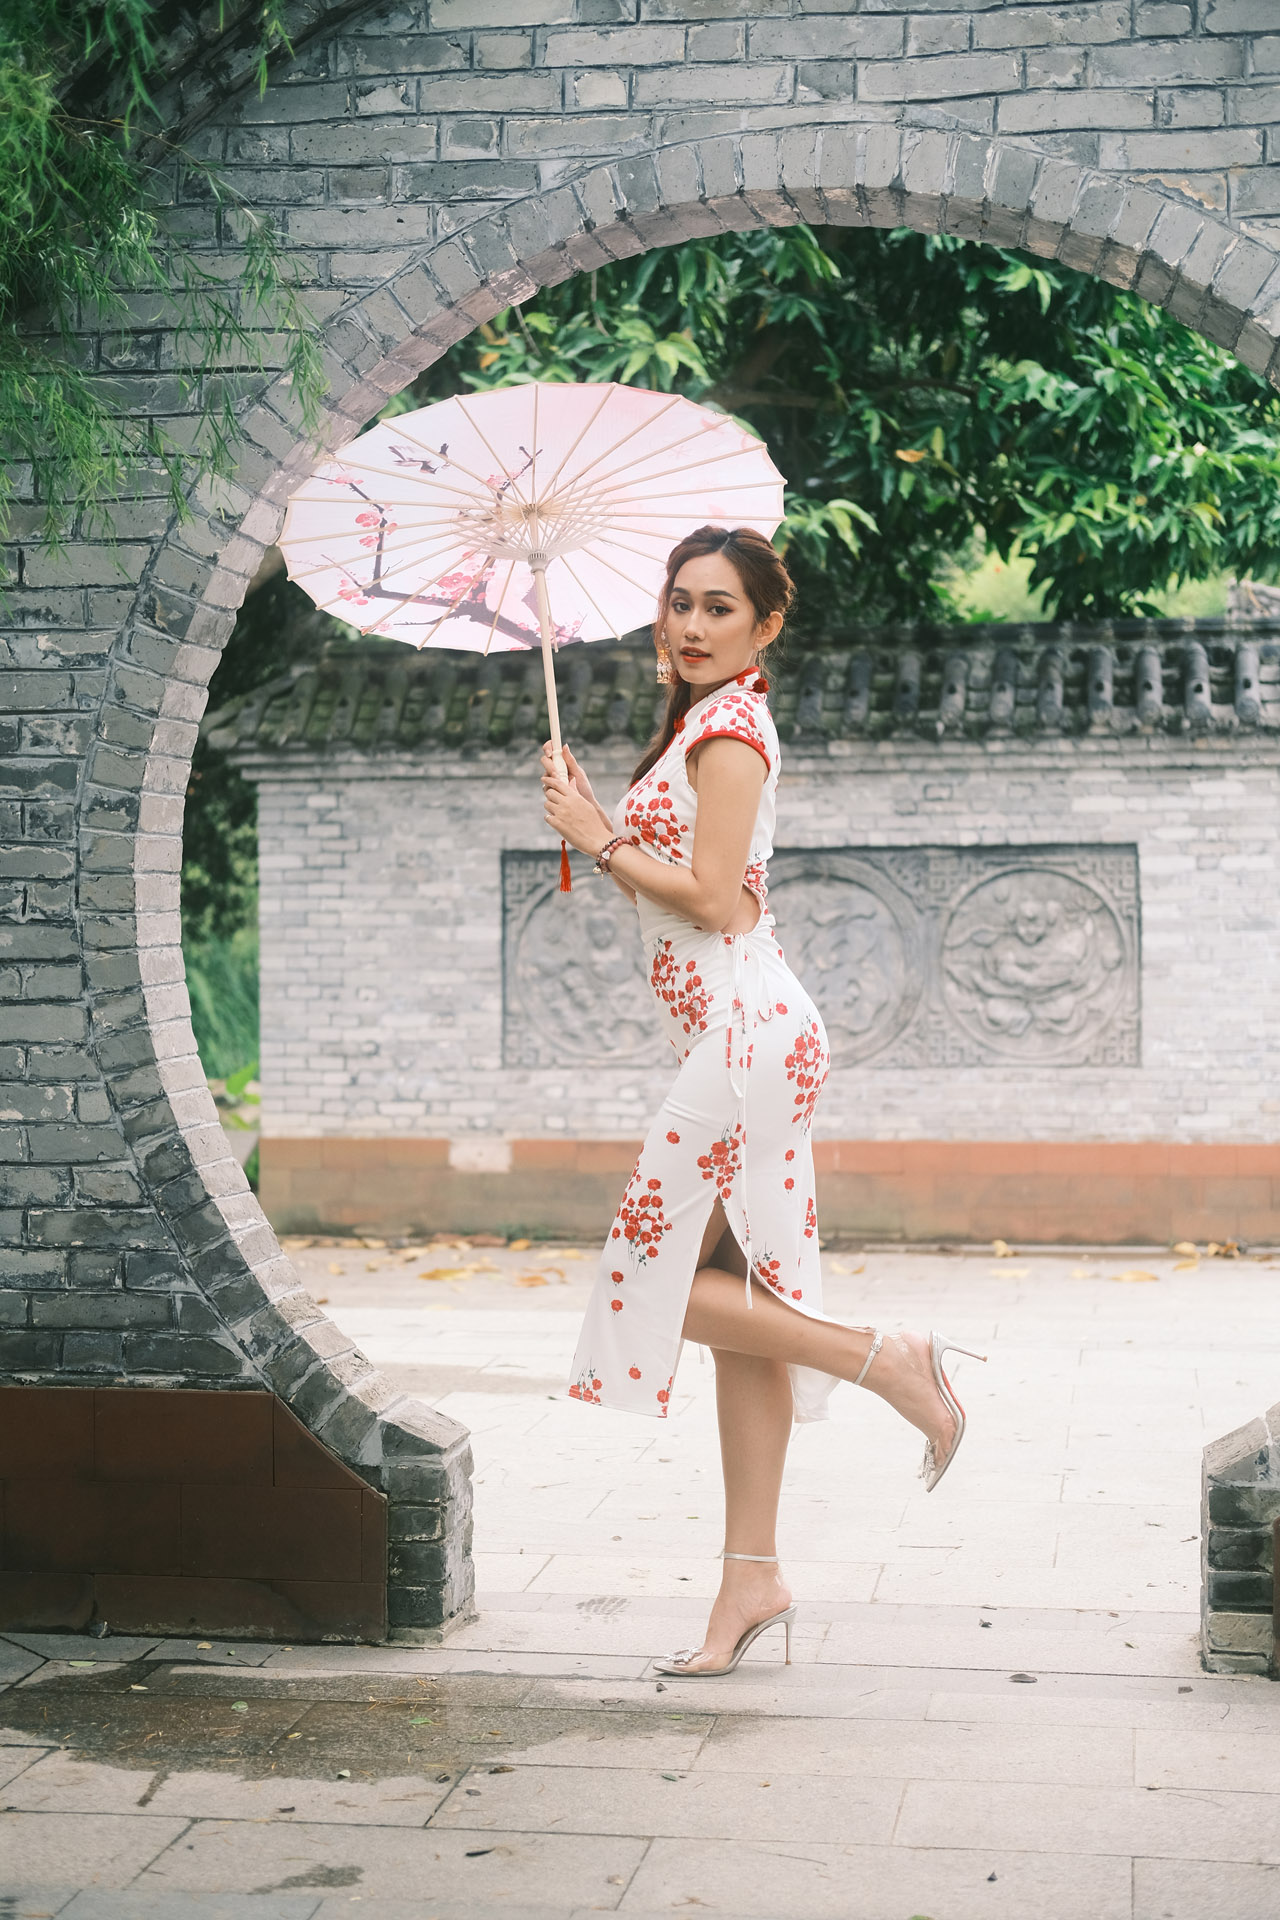 Qipao Chinese Dress Photoshoot Putrajaya Malaysia